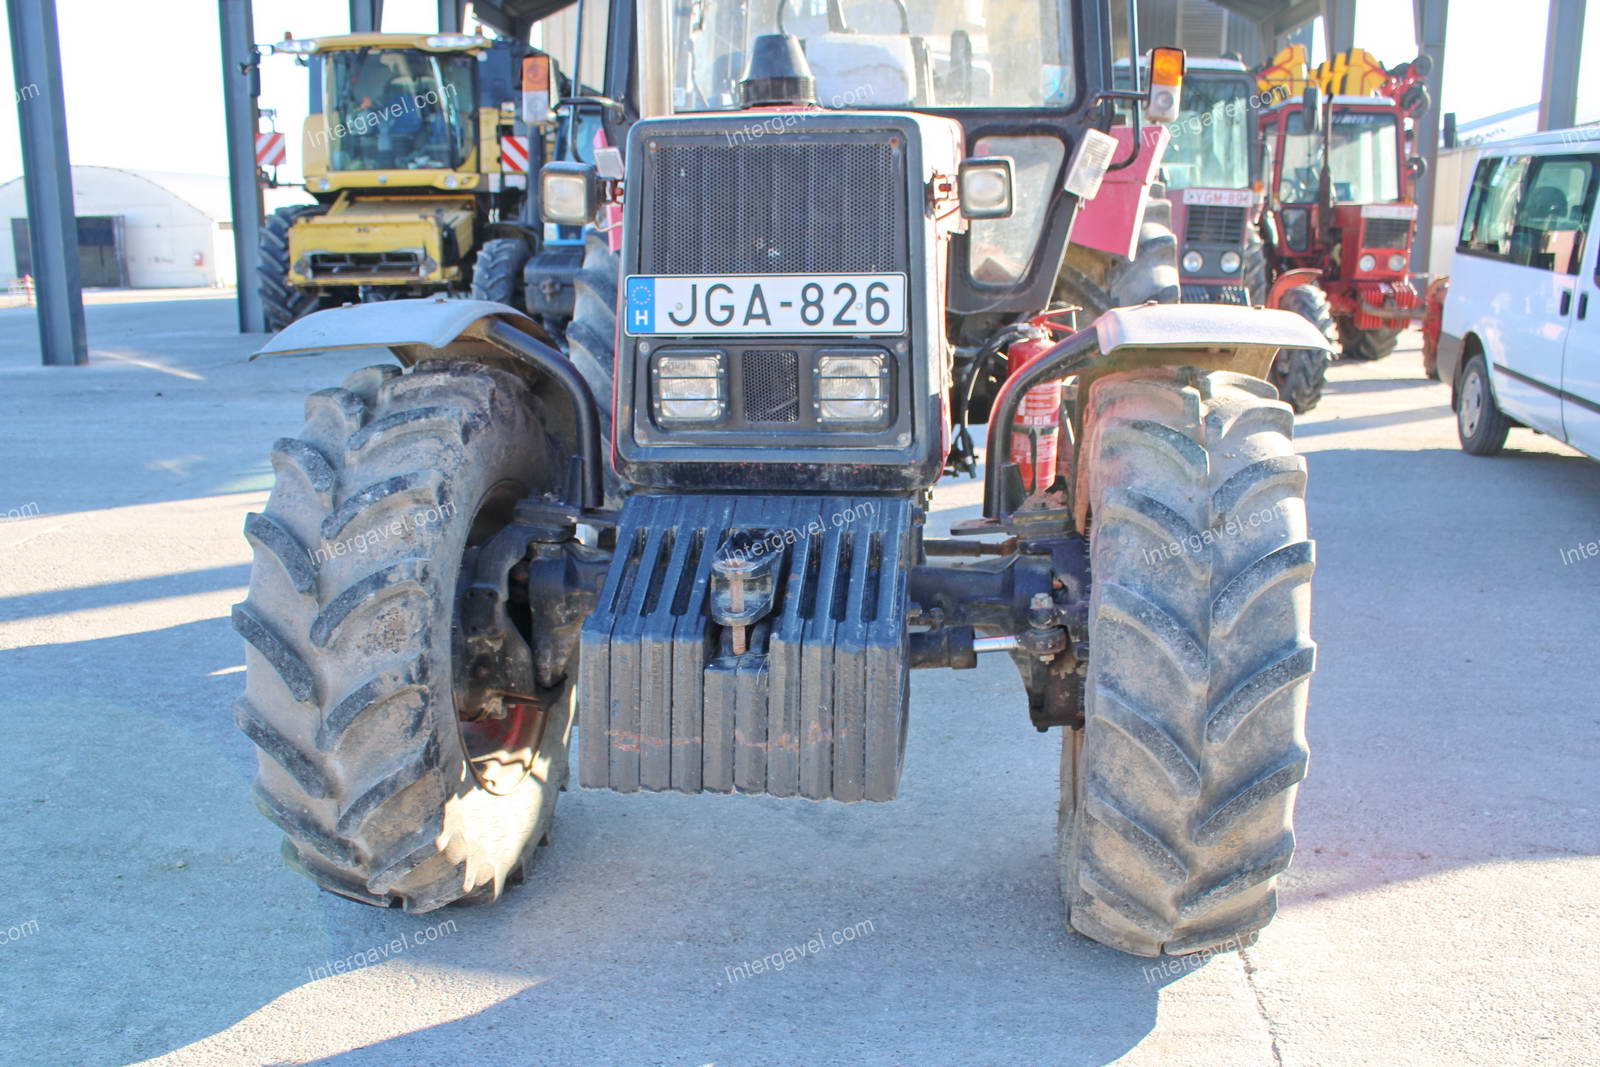 Traktor - Belarus, MTZ 1025.2